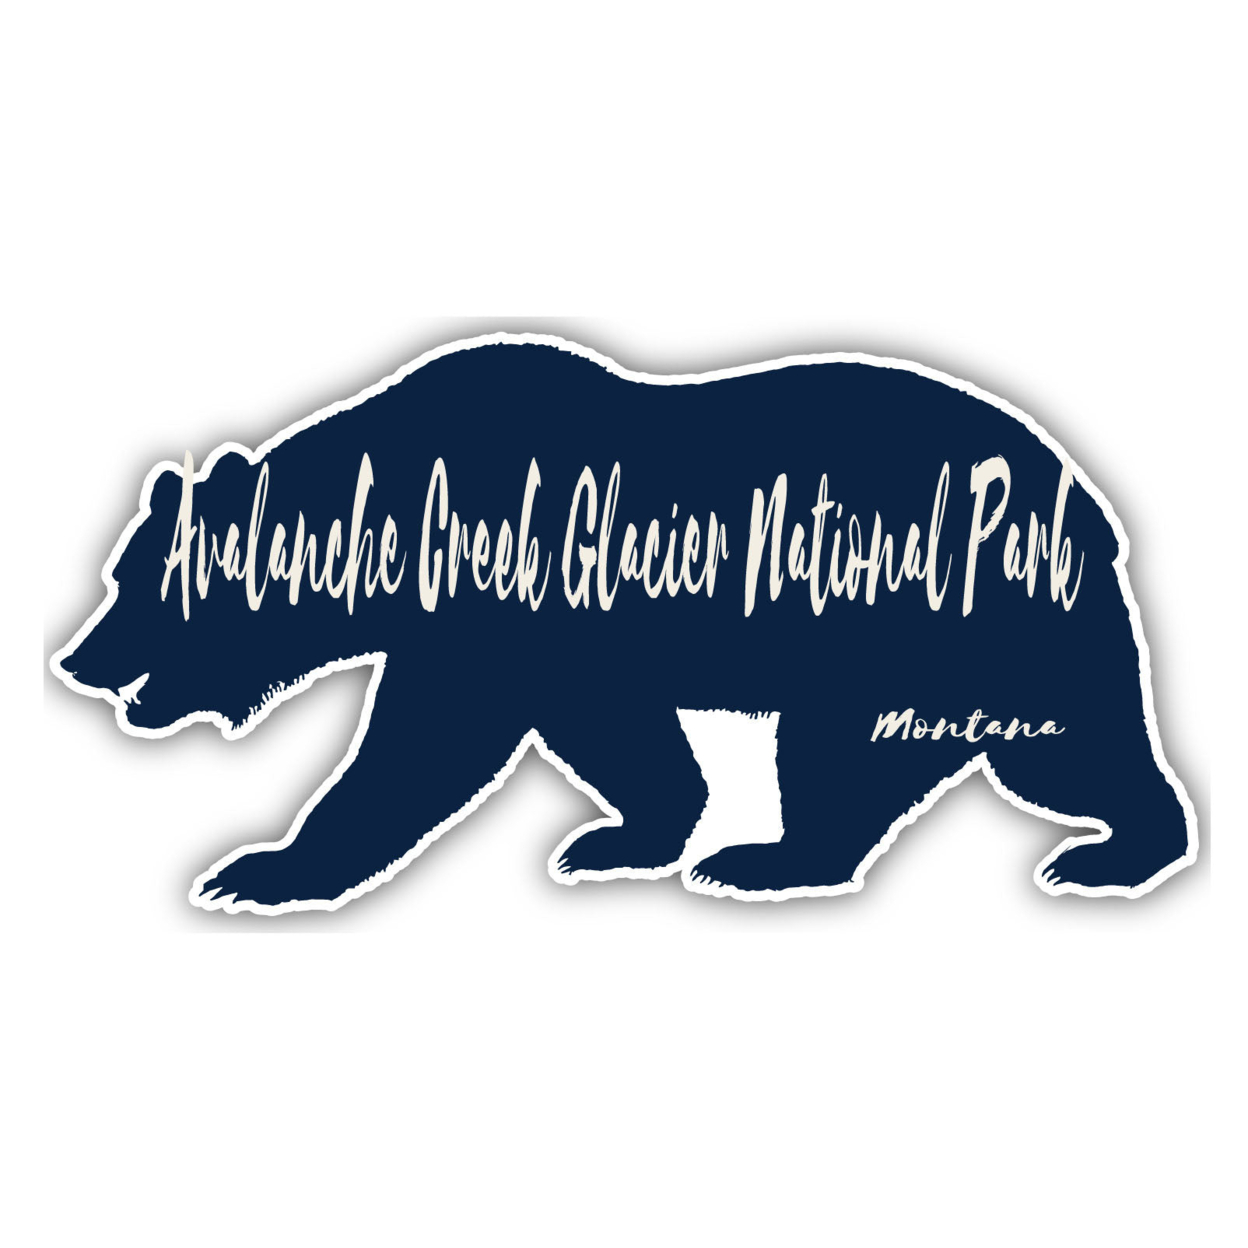 Avalanche Creek Glacier National Park Montana Souvenir Decorative Stickers (Choose Theme And Size) - Single Unit, 8-Inch, Bear